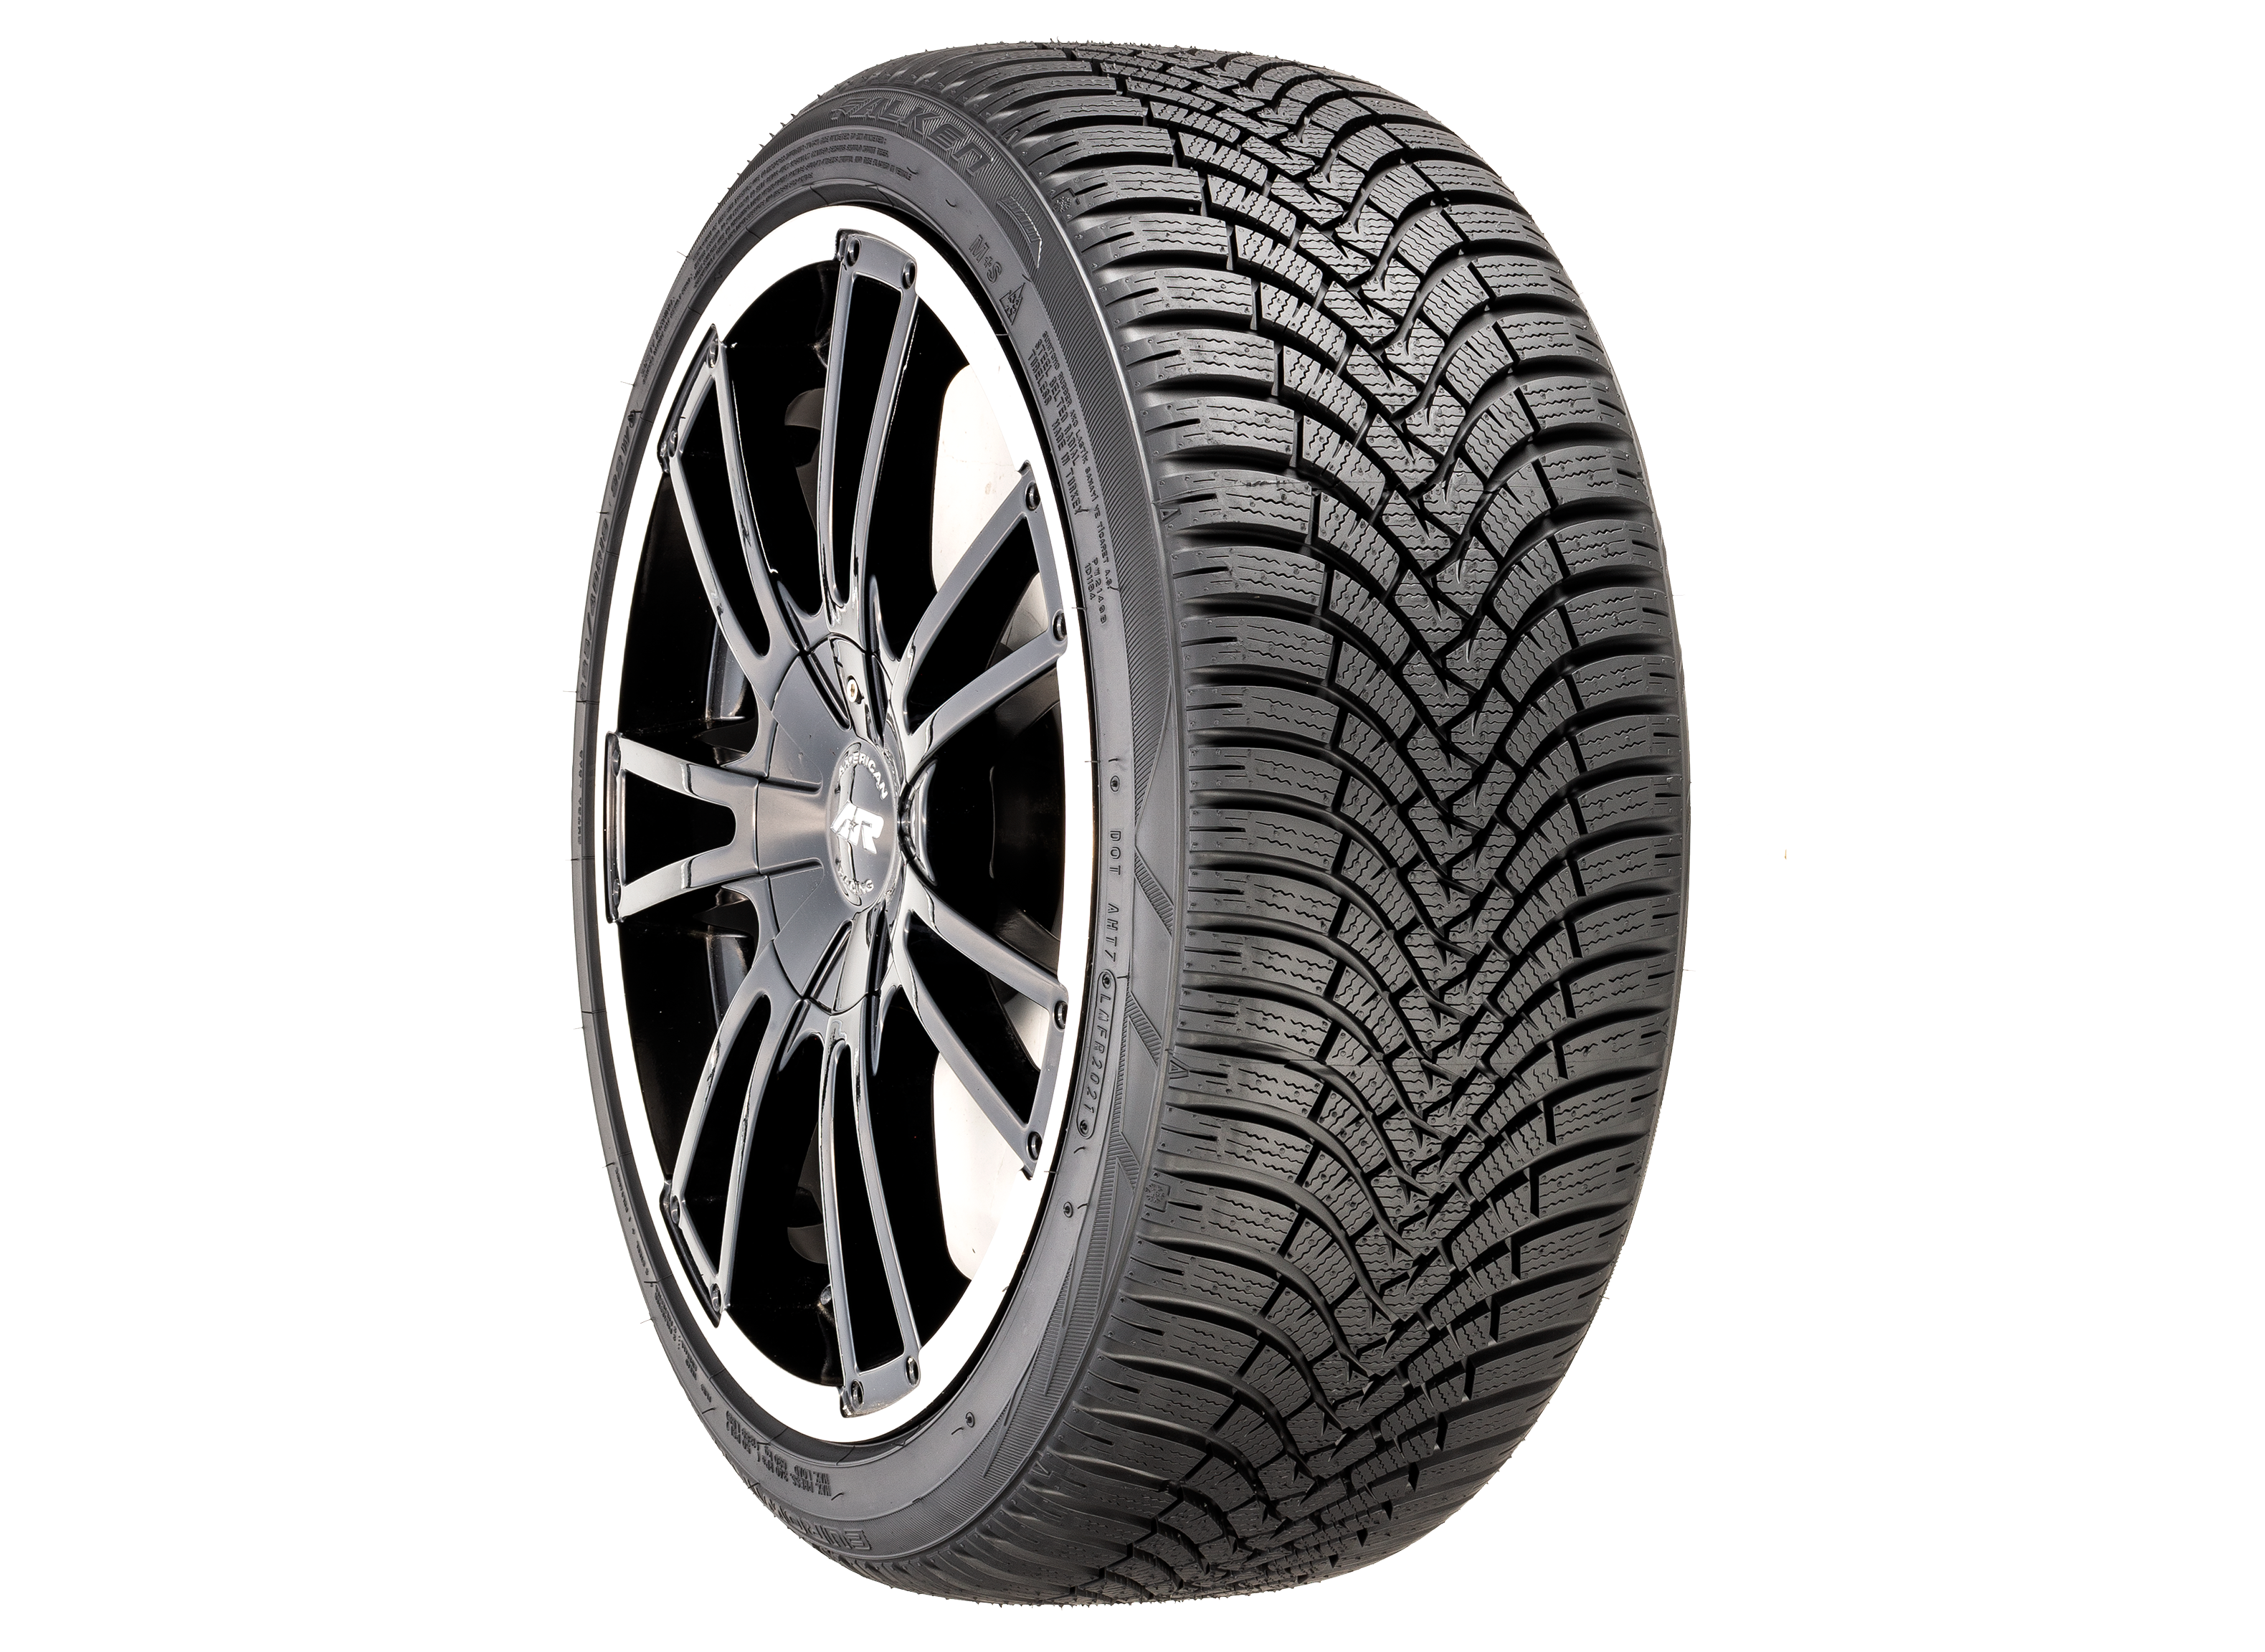 HS01 Reports Falken - Eurowinter Tire Consumer Review